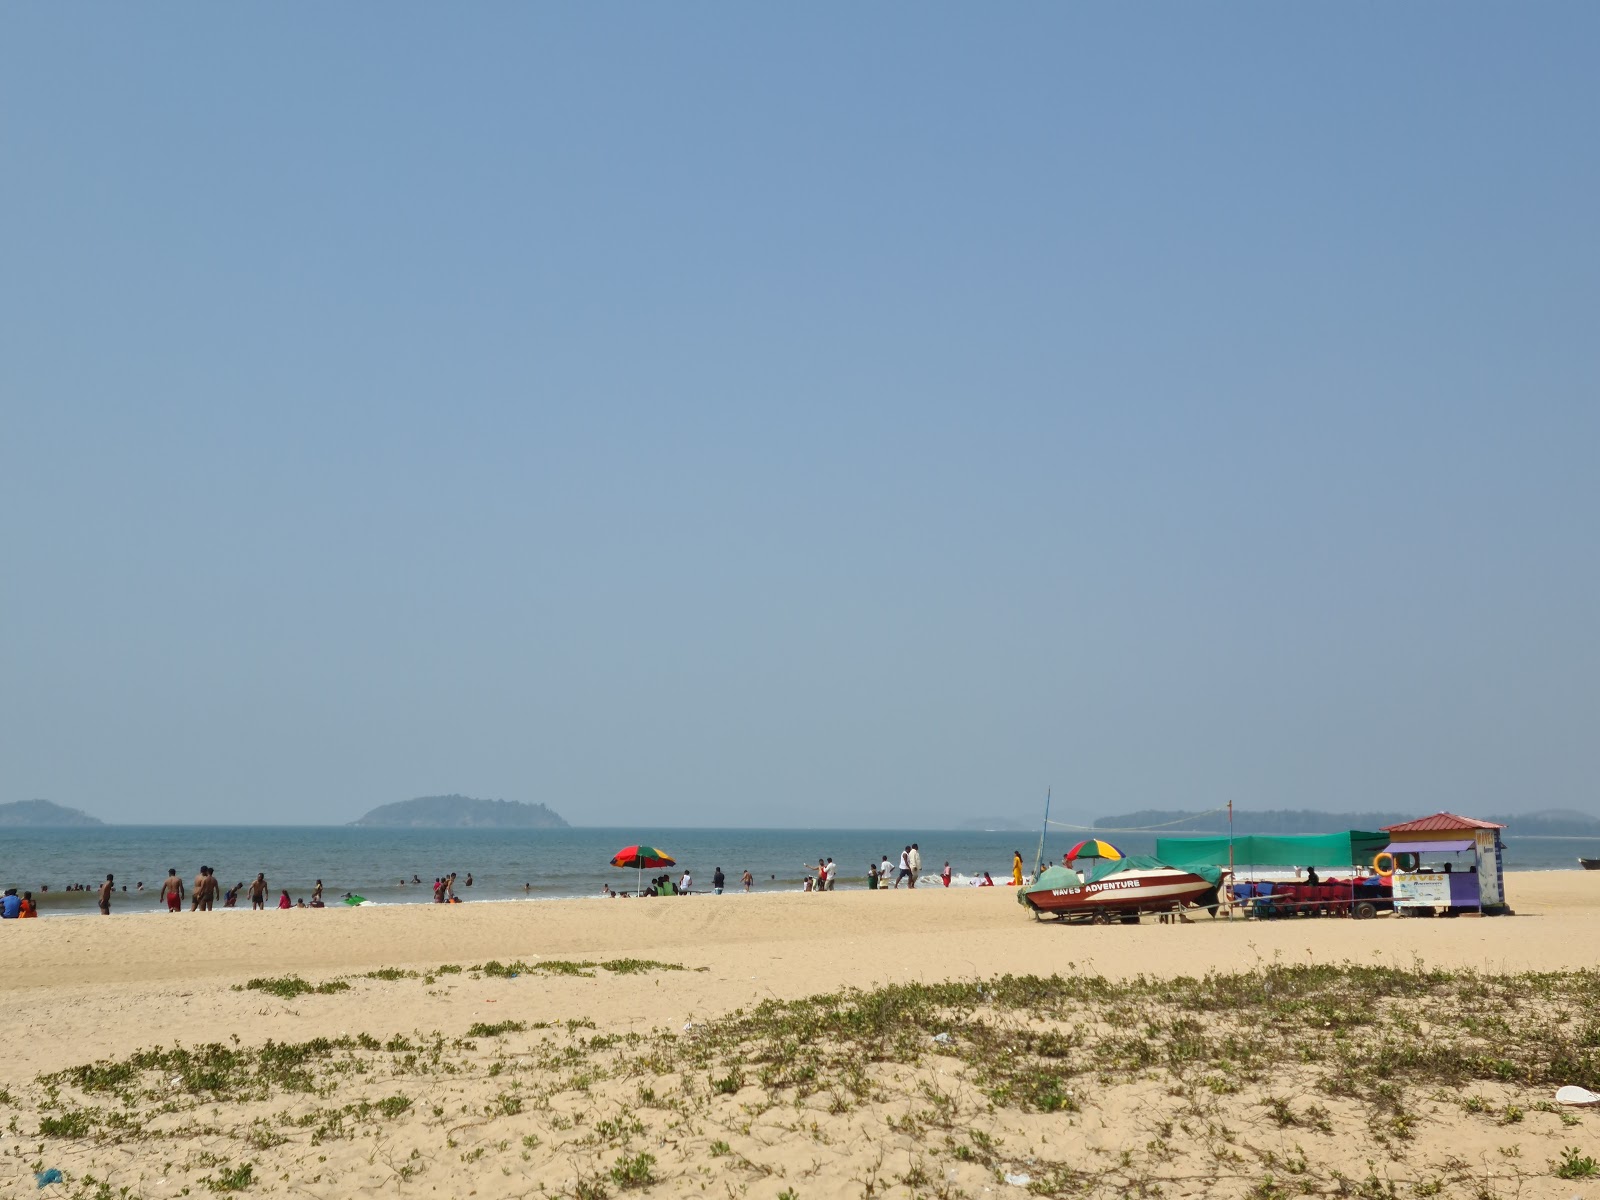 Foto de Rabindranath Tagore Beach - lugar popular entre os apreciadores de relaxamento